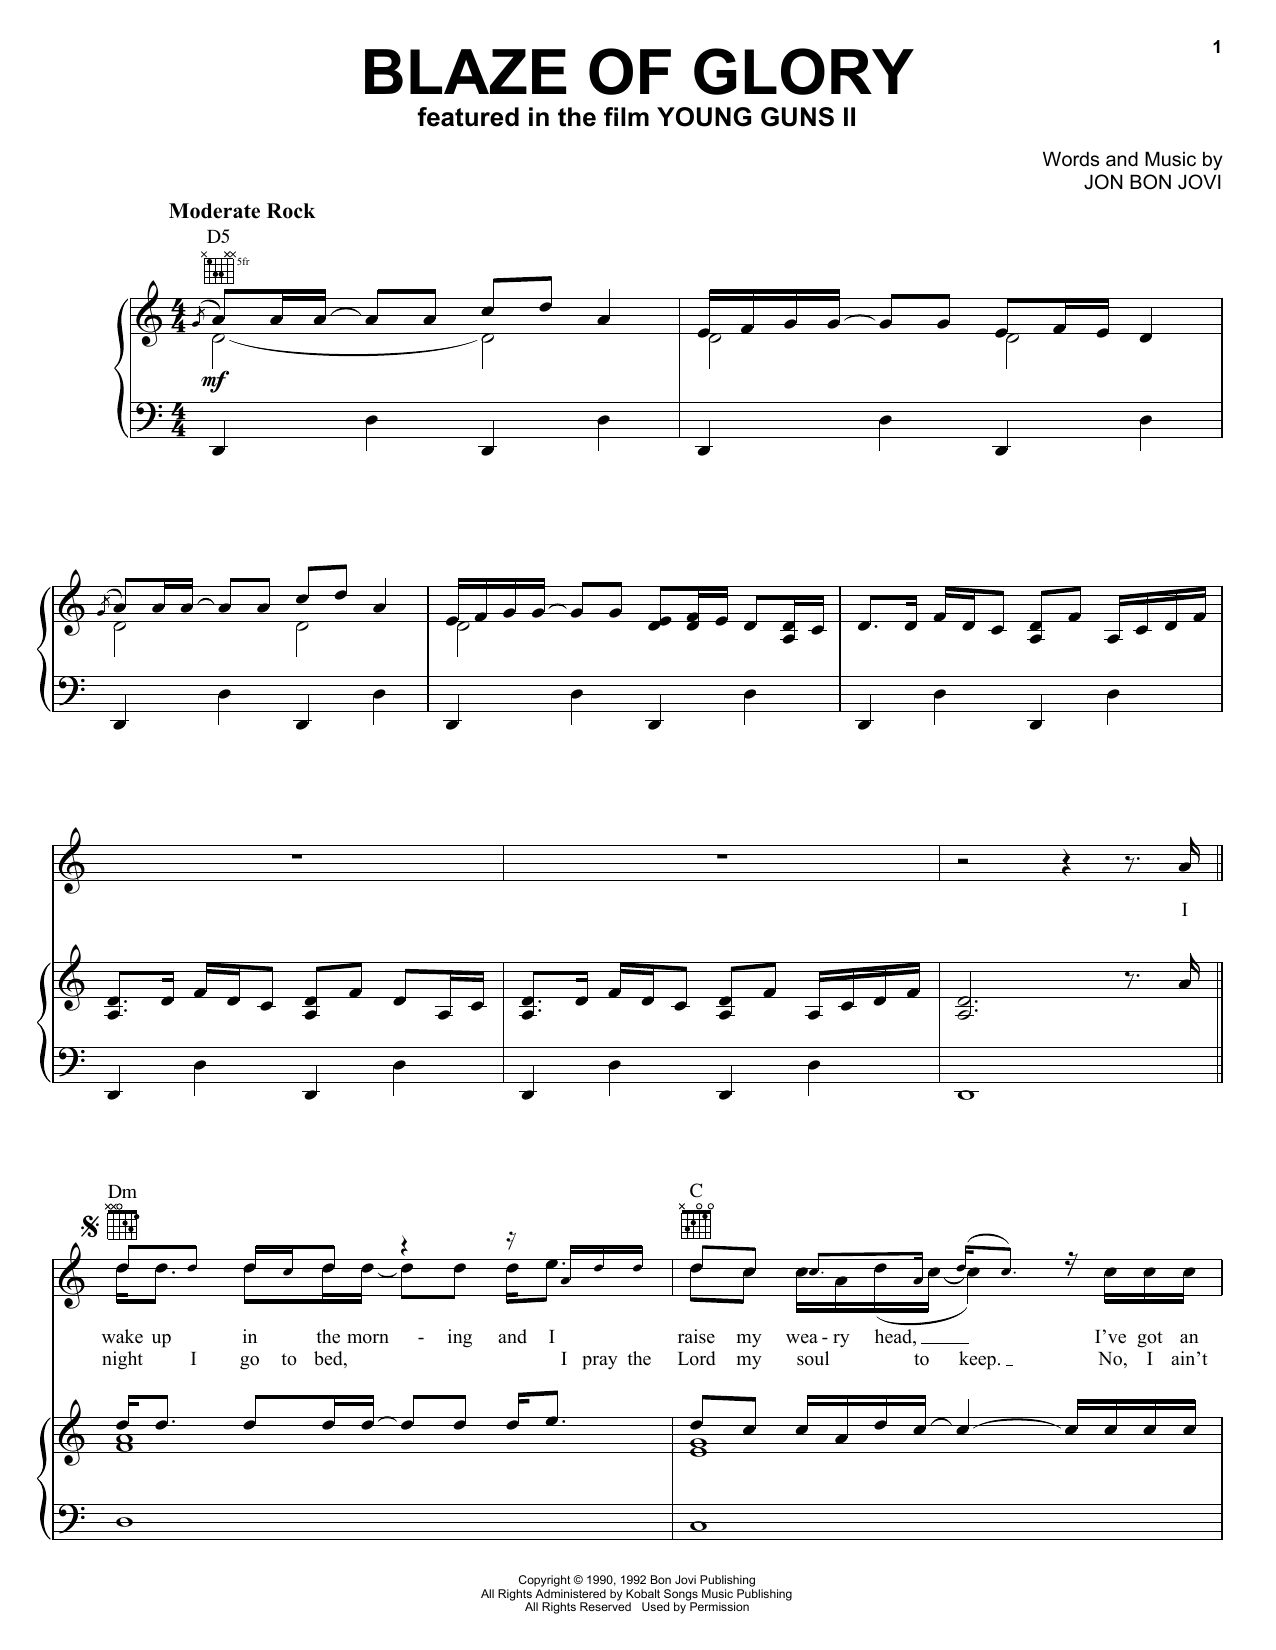 Jon Bon Jovi Blaze Of Glory Sheet Music Notes & Chords for French Horn - Download or Print PDF